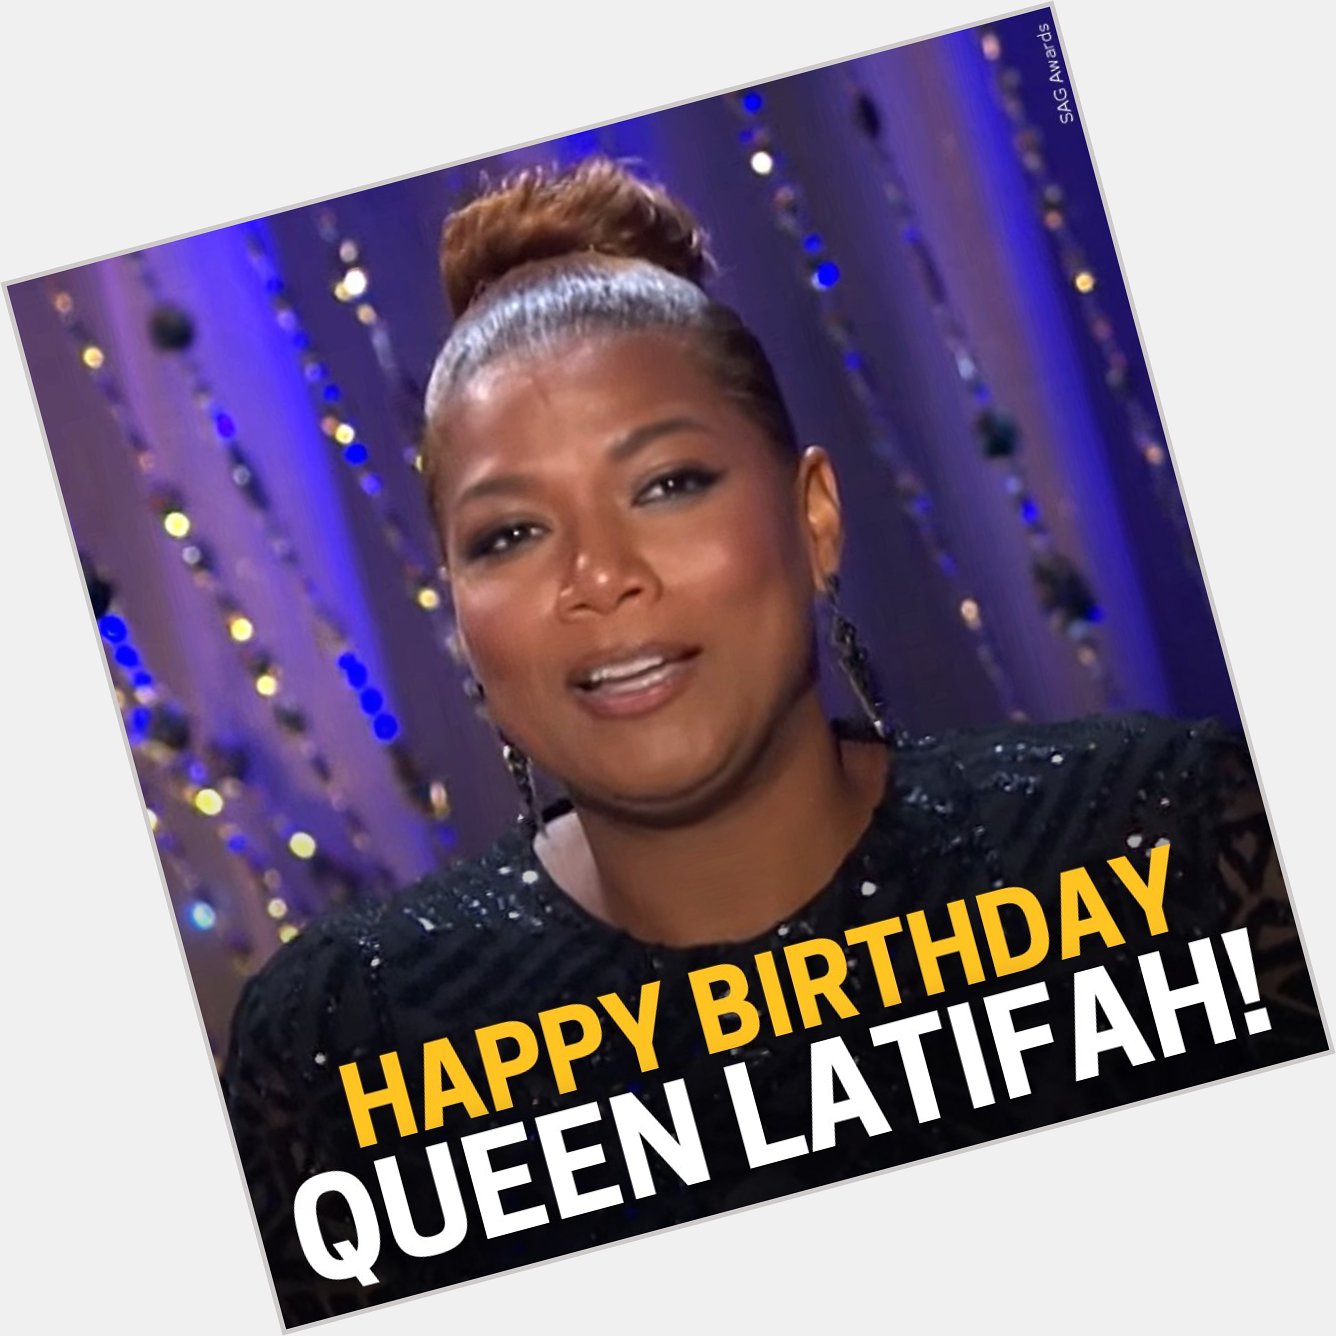 Happy Birthday, Queen Latifah! The award-winning actress and hip hop artist turns 53 today! 